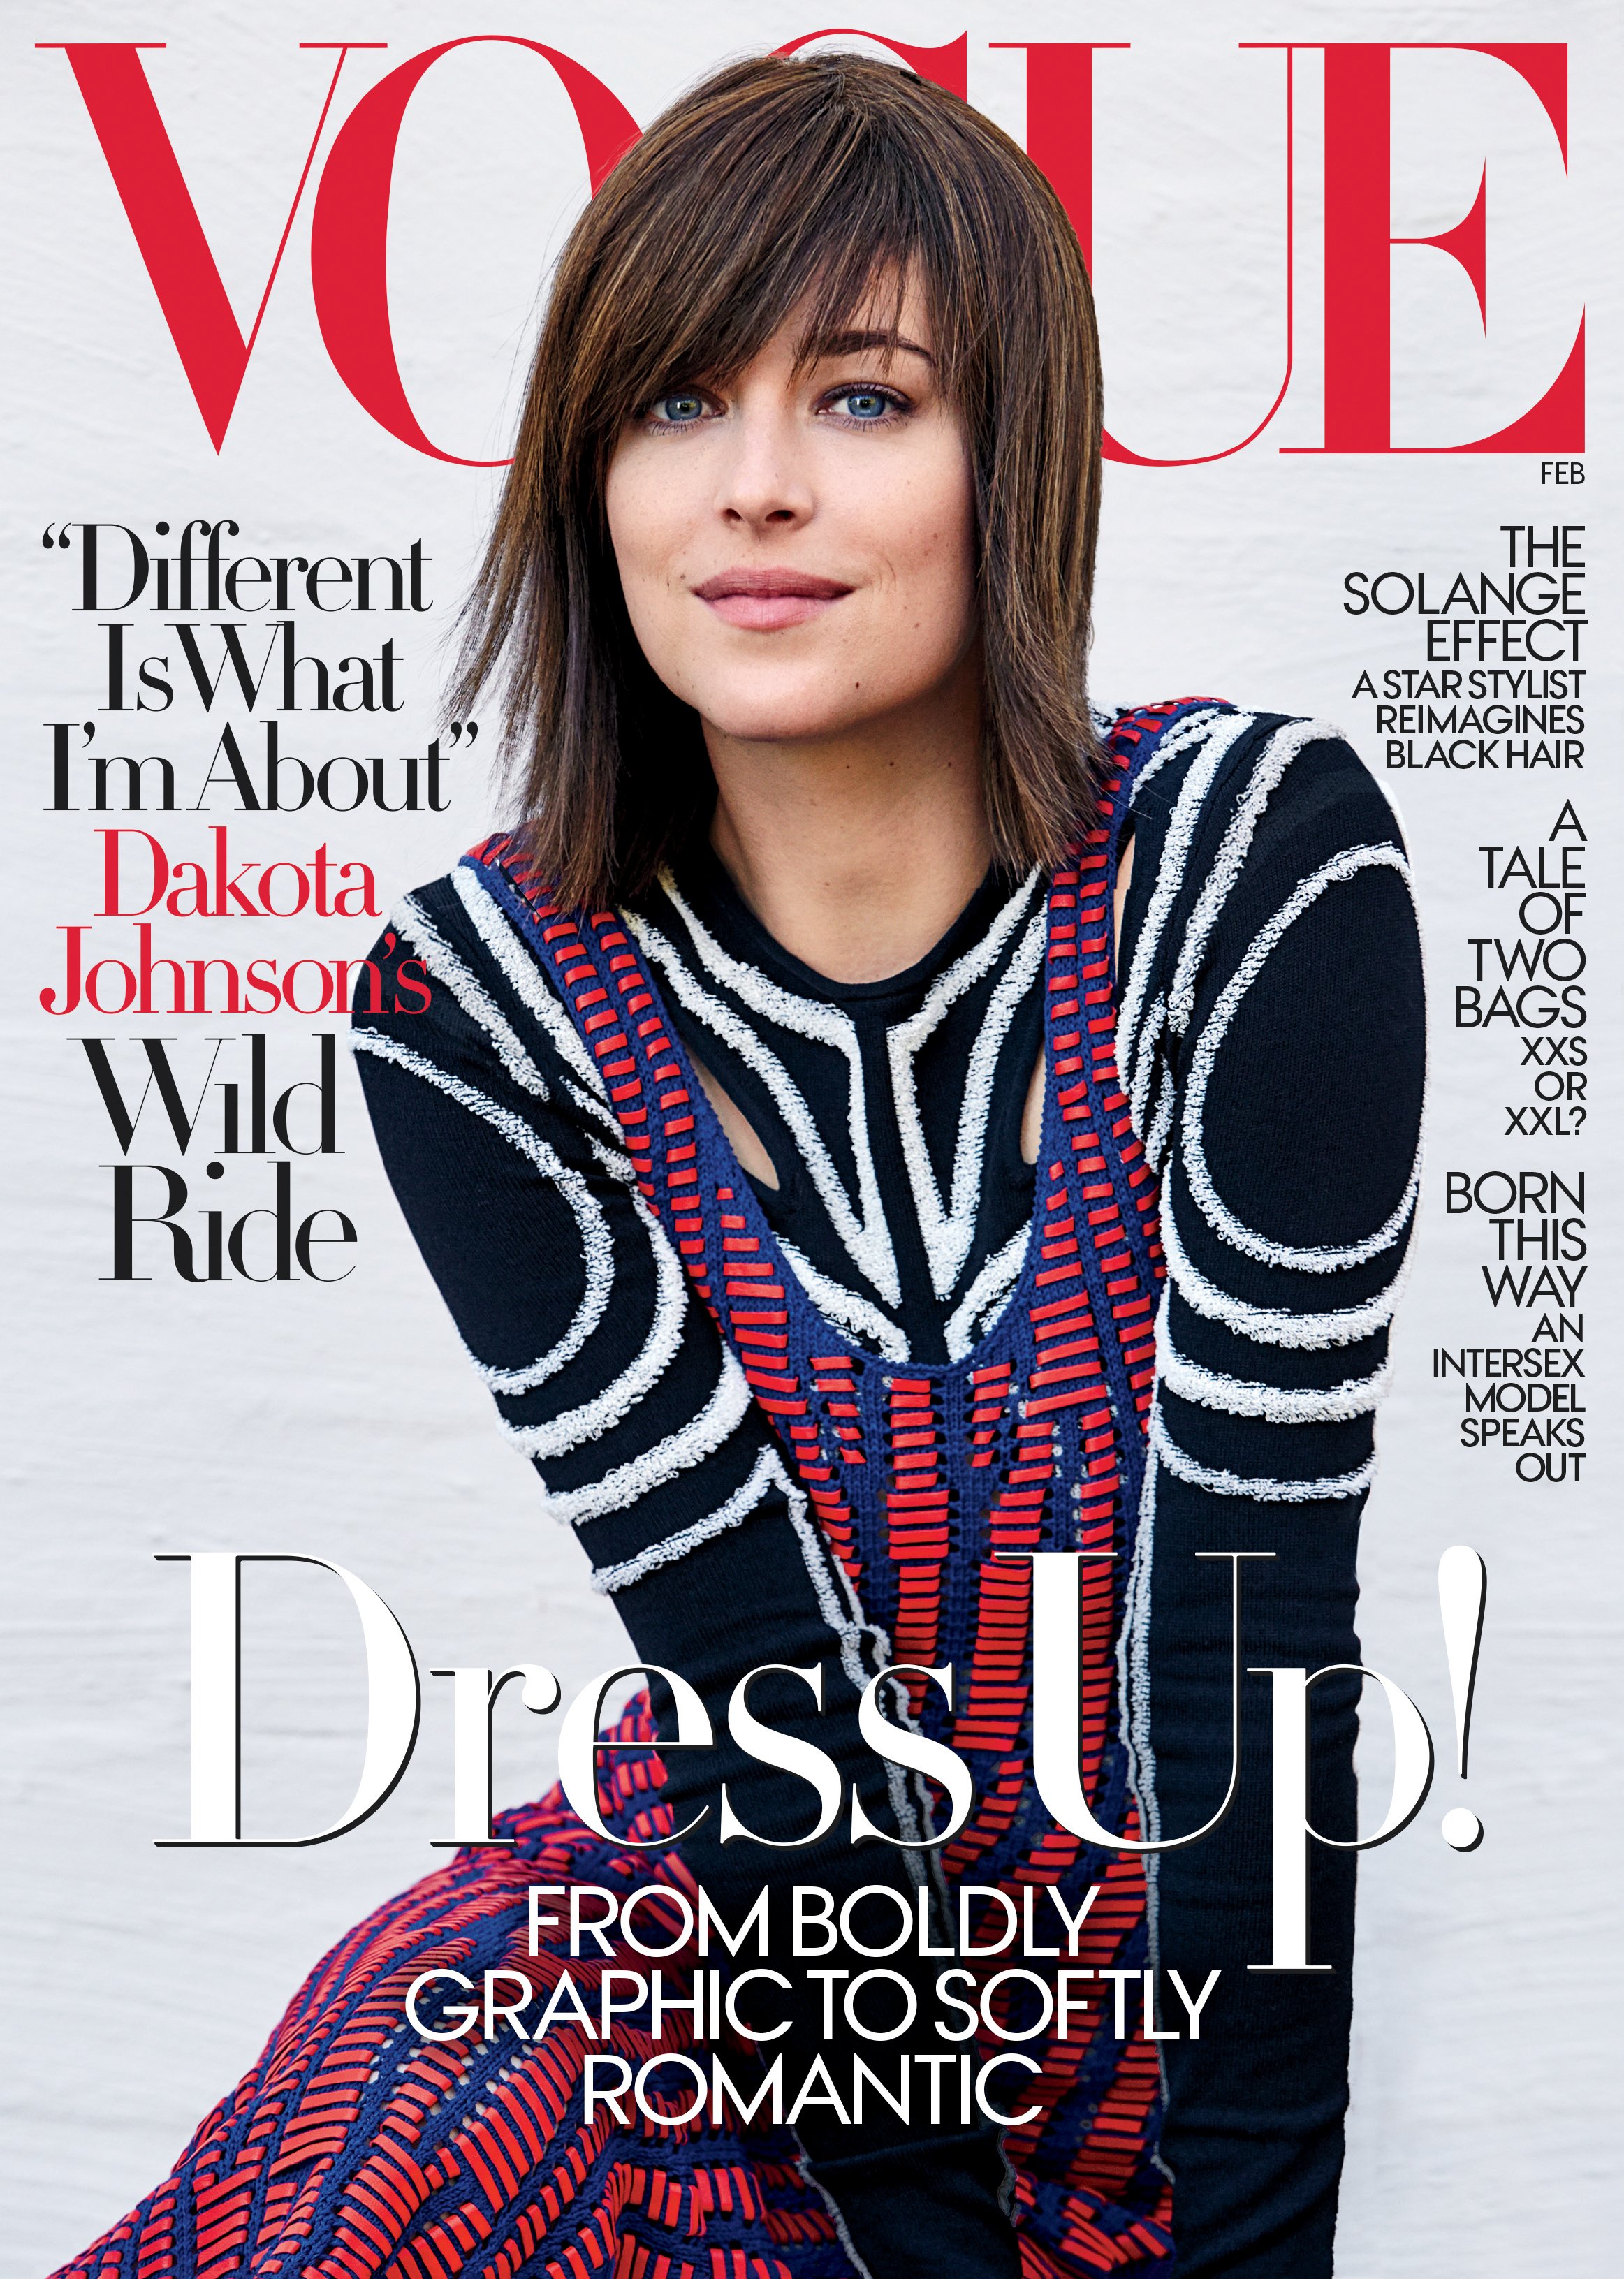 Dakota Johnson covers Vogue's Feb. 2017 issue